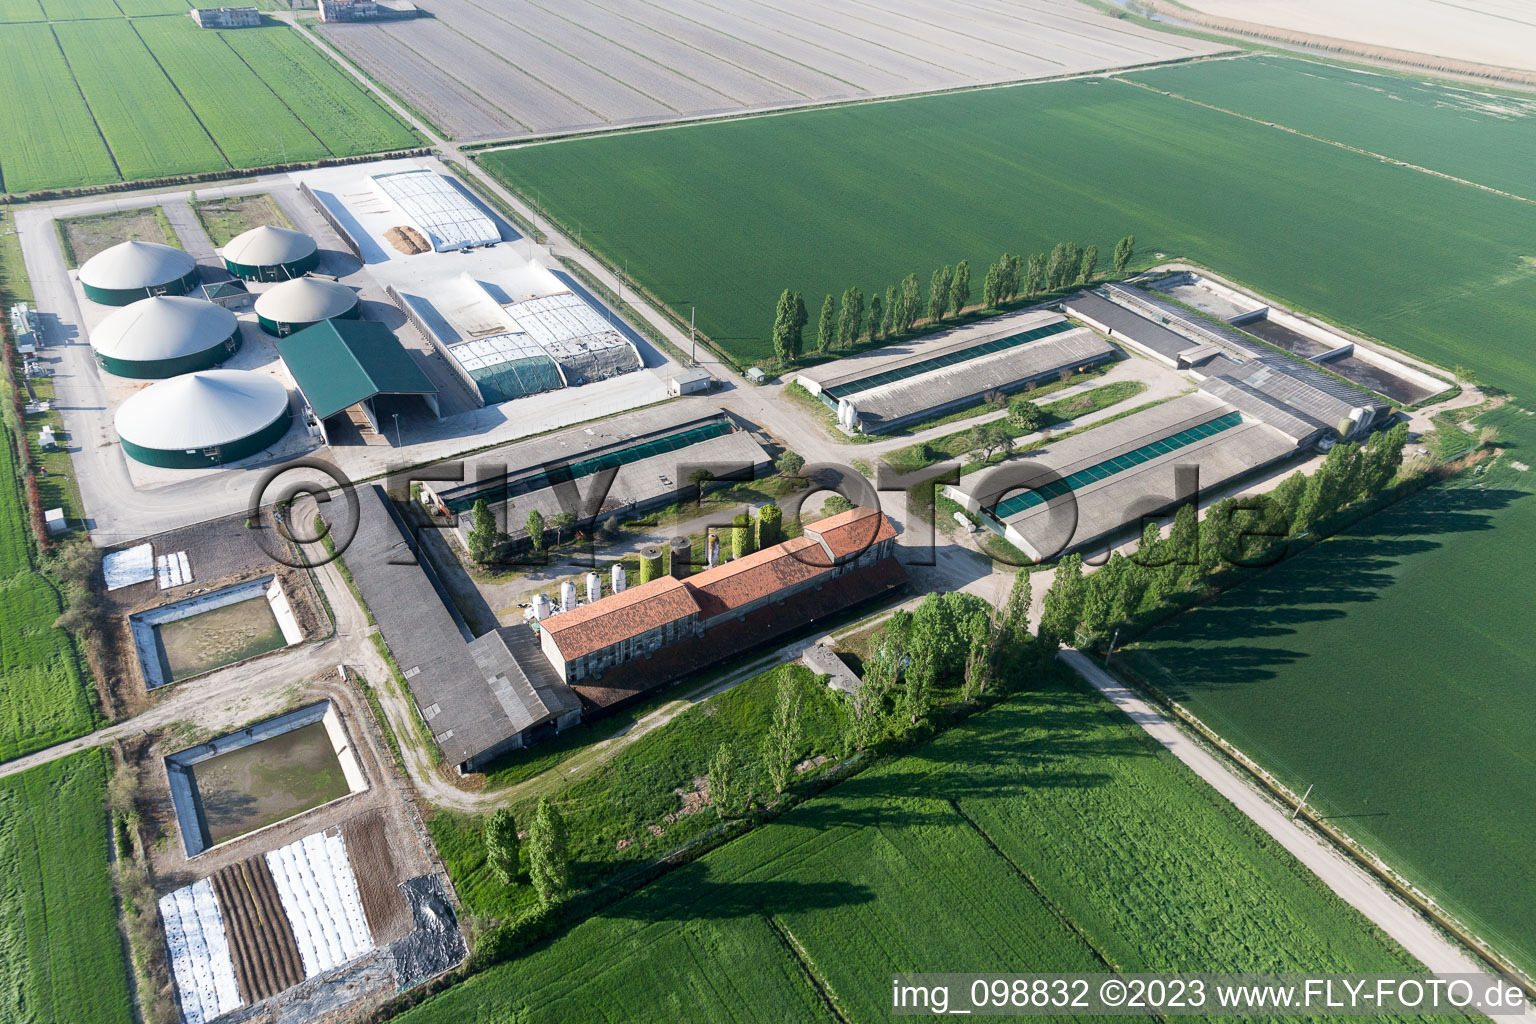 Aerial view of Agenzia Valpelina in the state Veneto, Italy